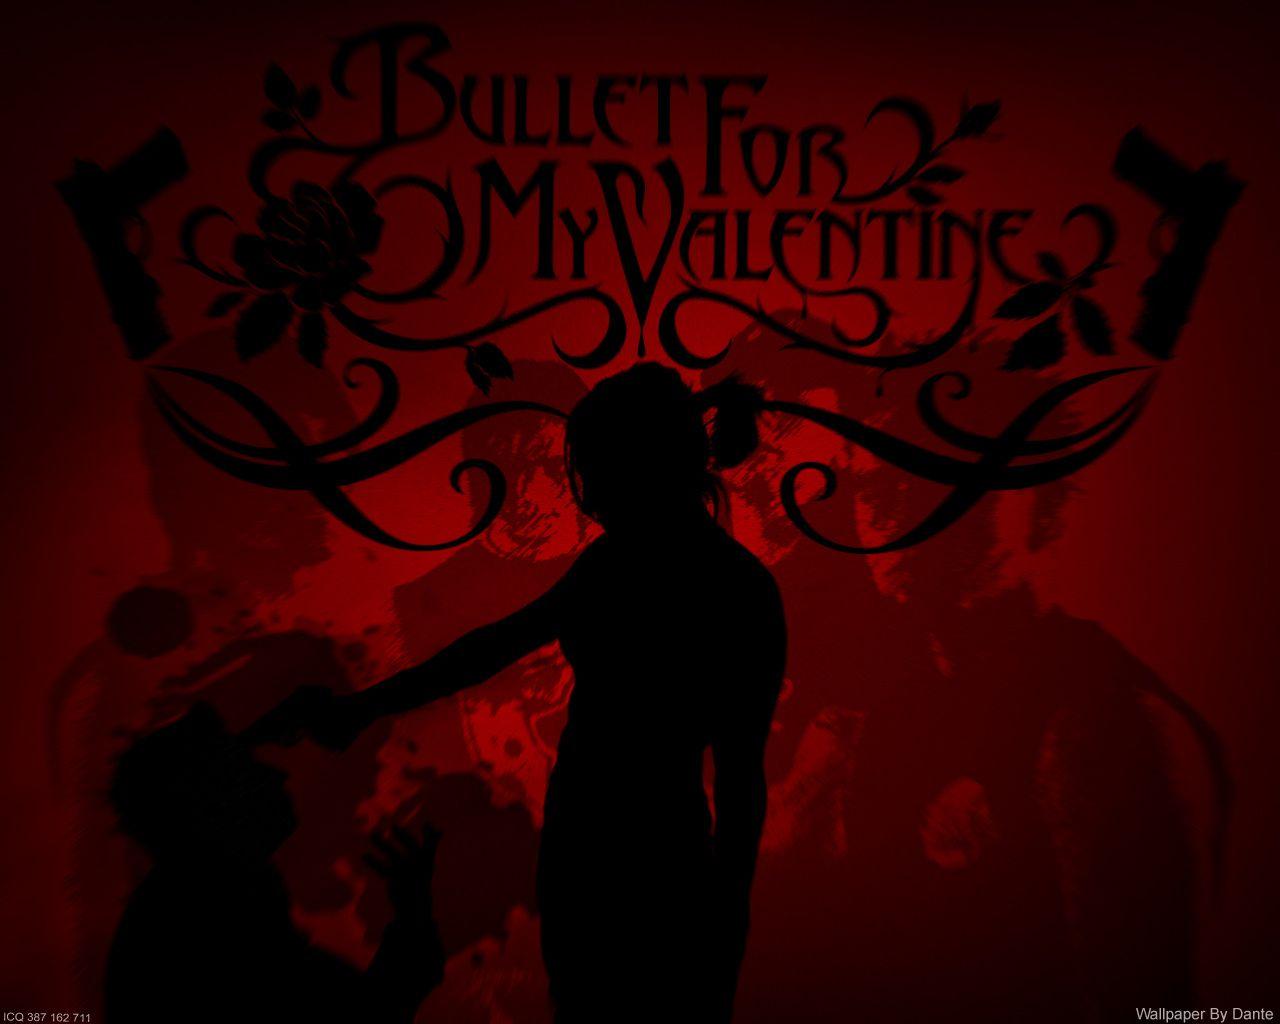 Bullet For My Valentine Wallpaper, Best & Inspirational High